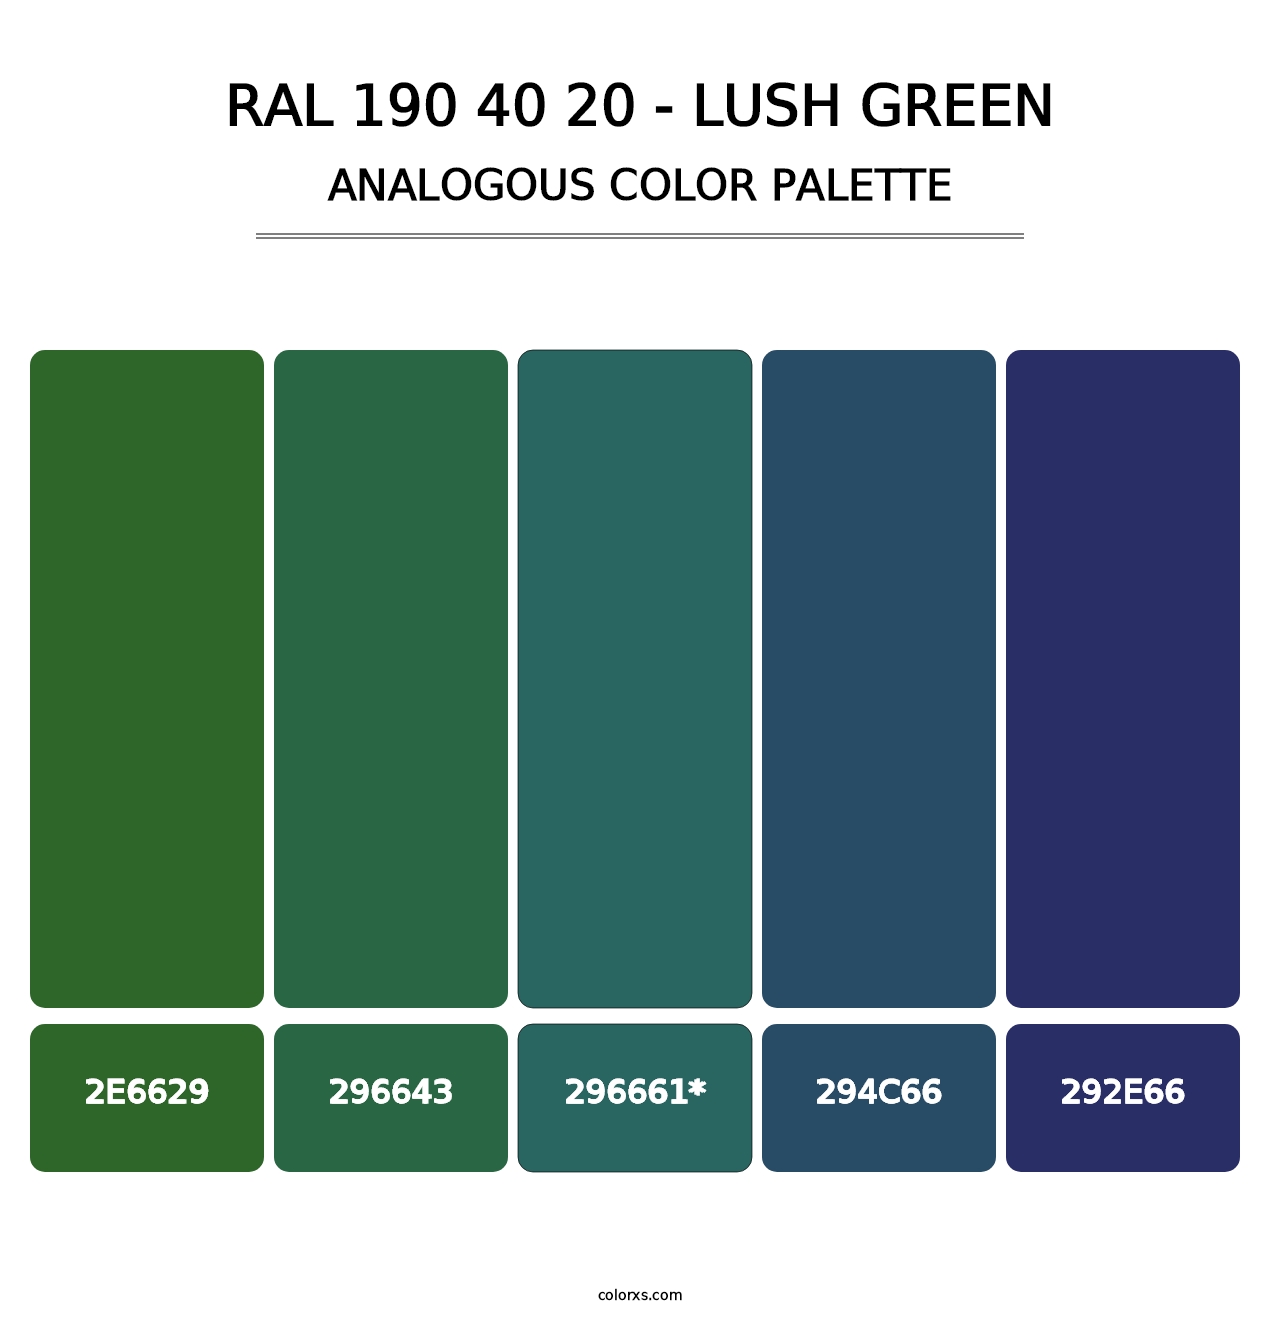 RAL 190 40 20 - Lush Green - Analogous Color Palette